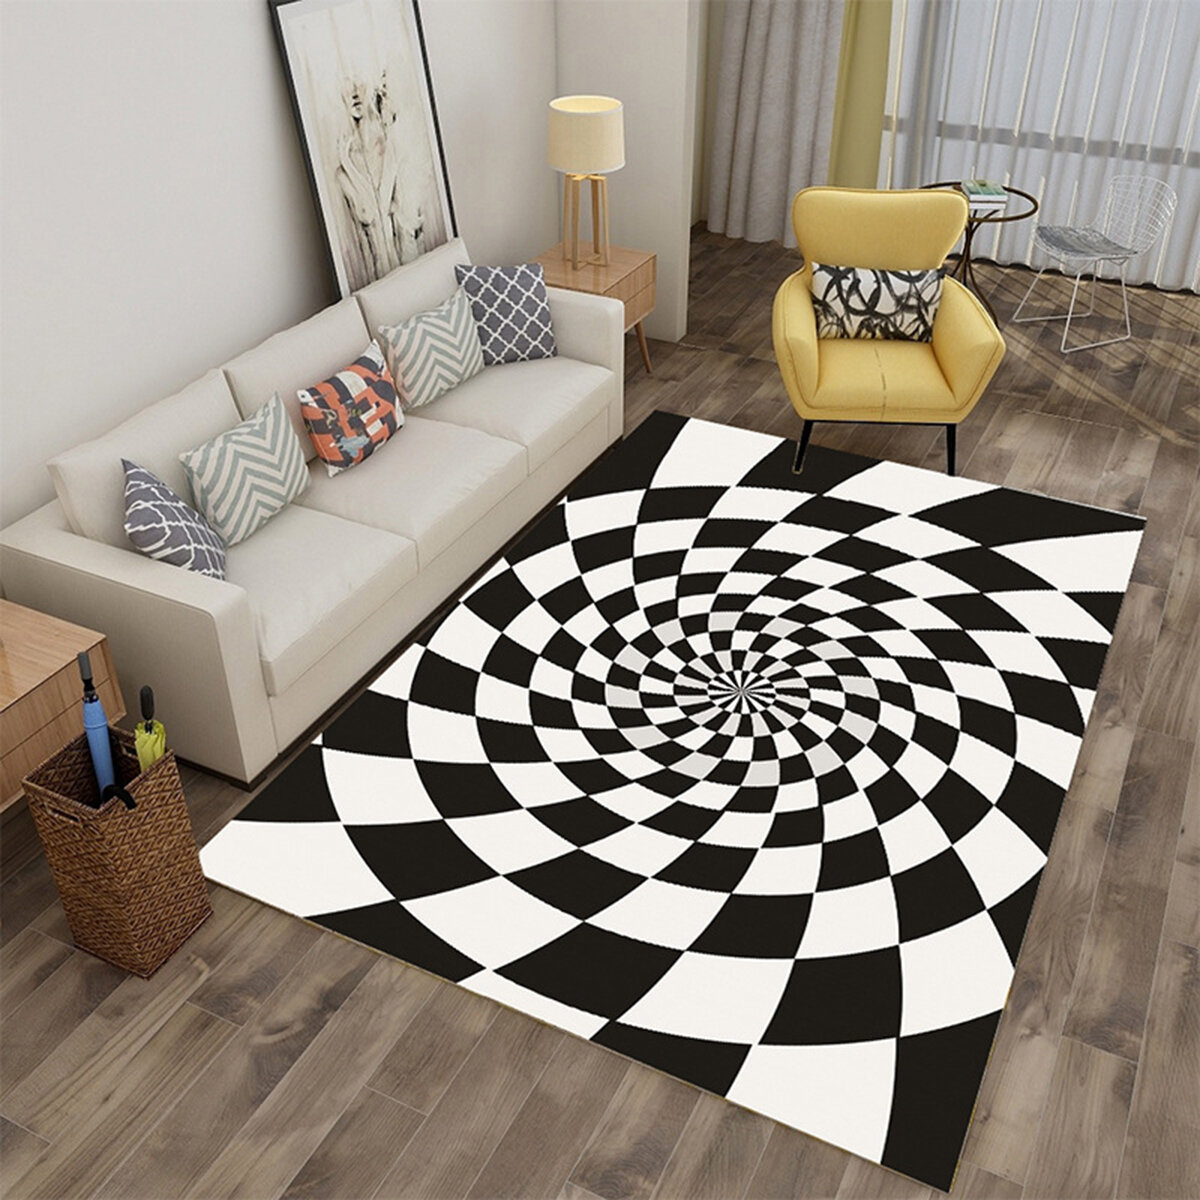 

Checkered Whirlpool Optical Illusions Non Slip Area Rug, Durbale Anti-Slip Floor Mat Non-Woven Black White Doormat, for